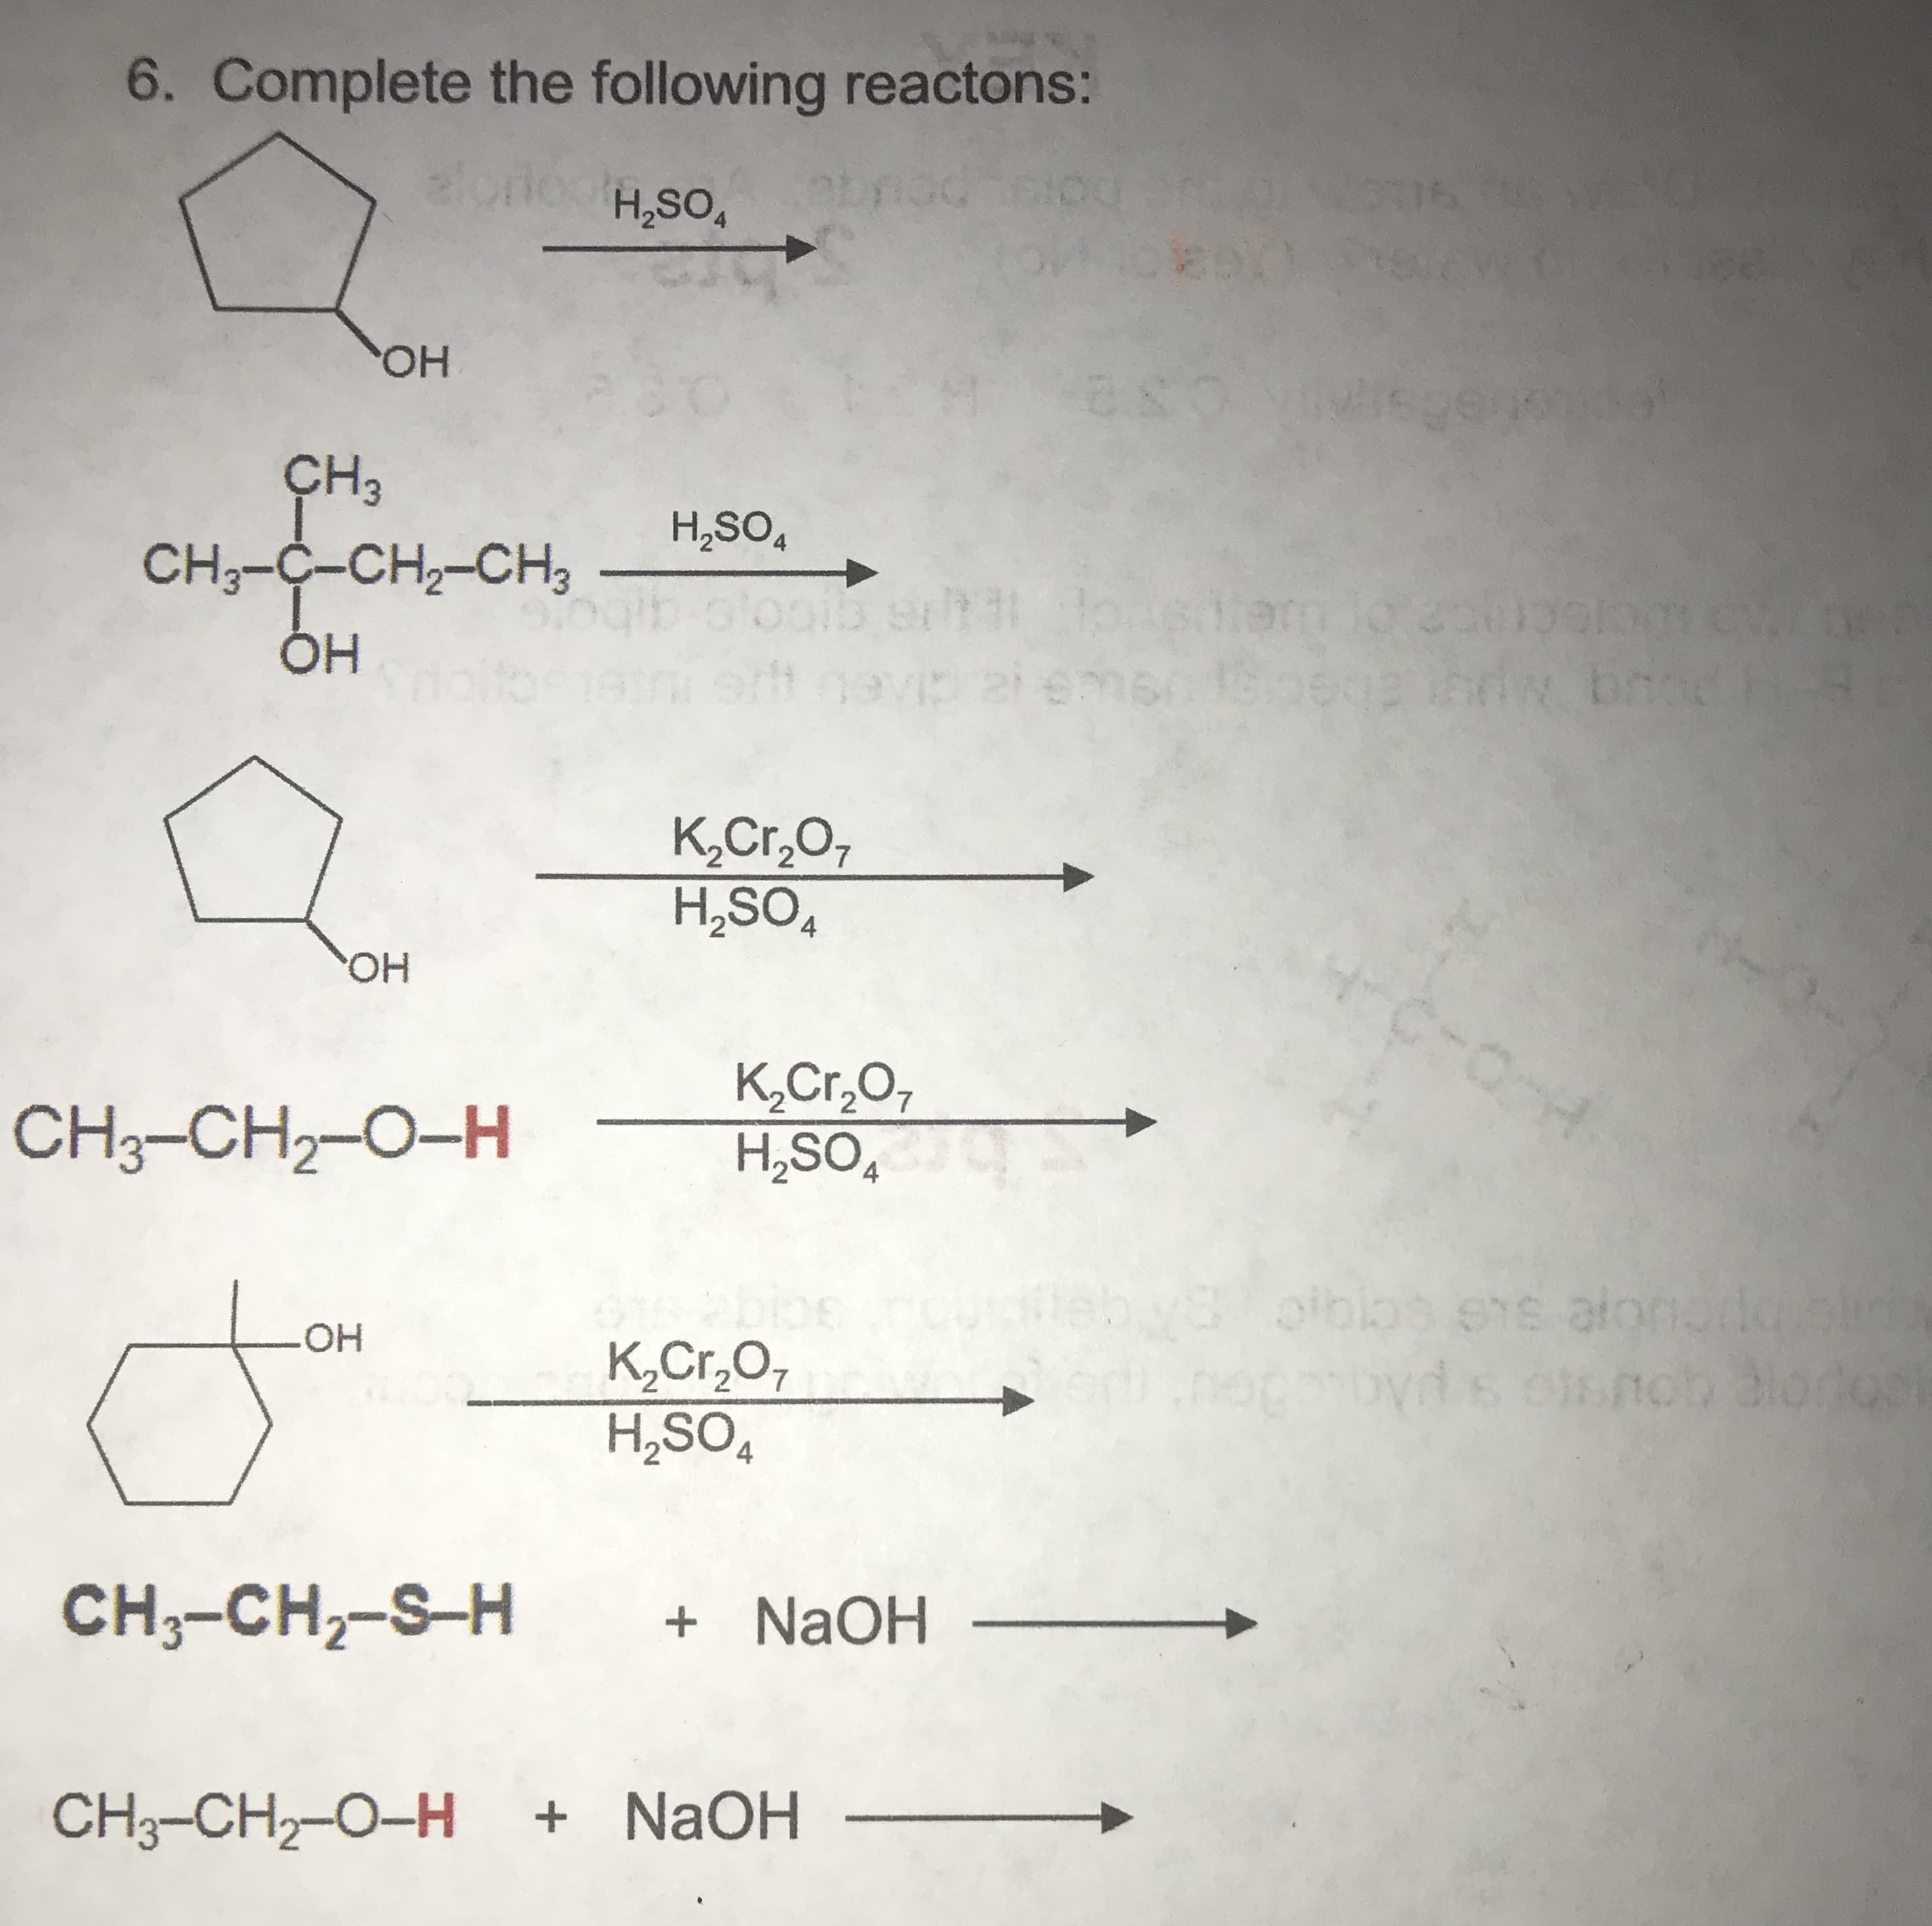 6. Complete the following reactons:
H,SO,
HO,
ÇH3
H,SO,
4
CH3-C-CH,-CH3
K,Cr,O,
H,SO,
4
HO,
